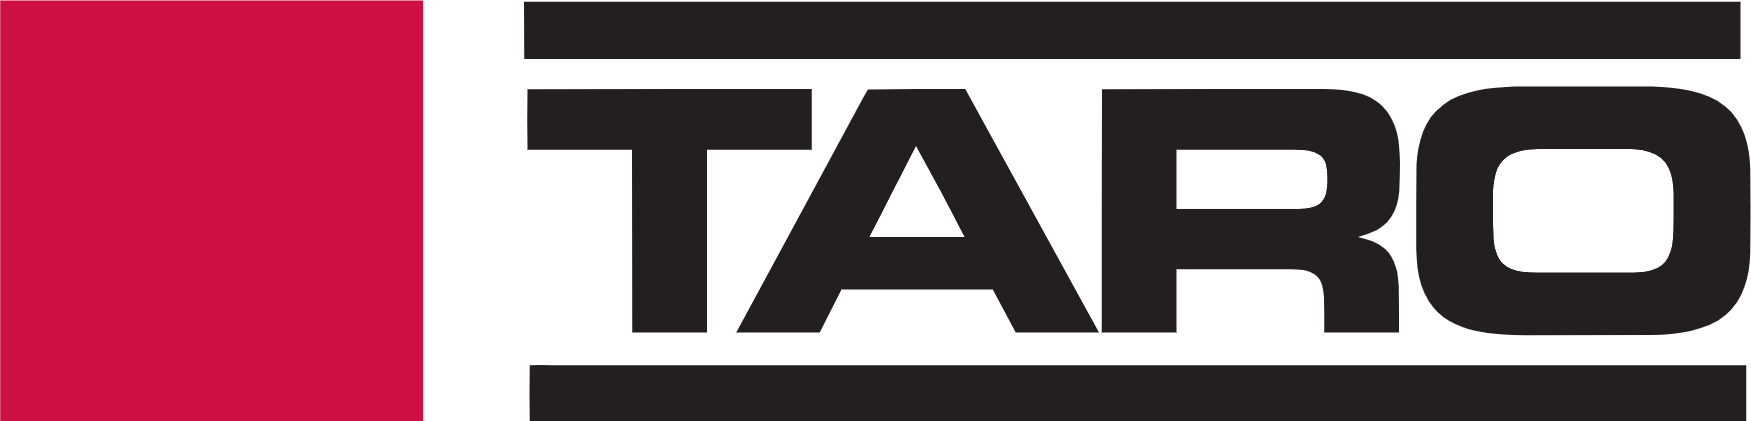 Taro Pharmaceutical logo large (transparent PNG)